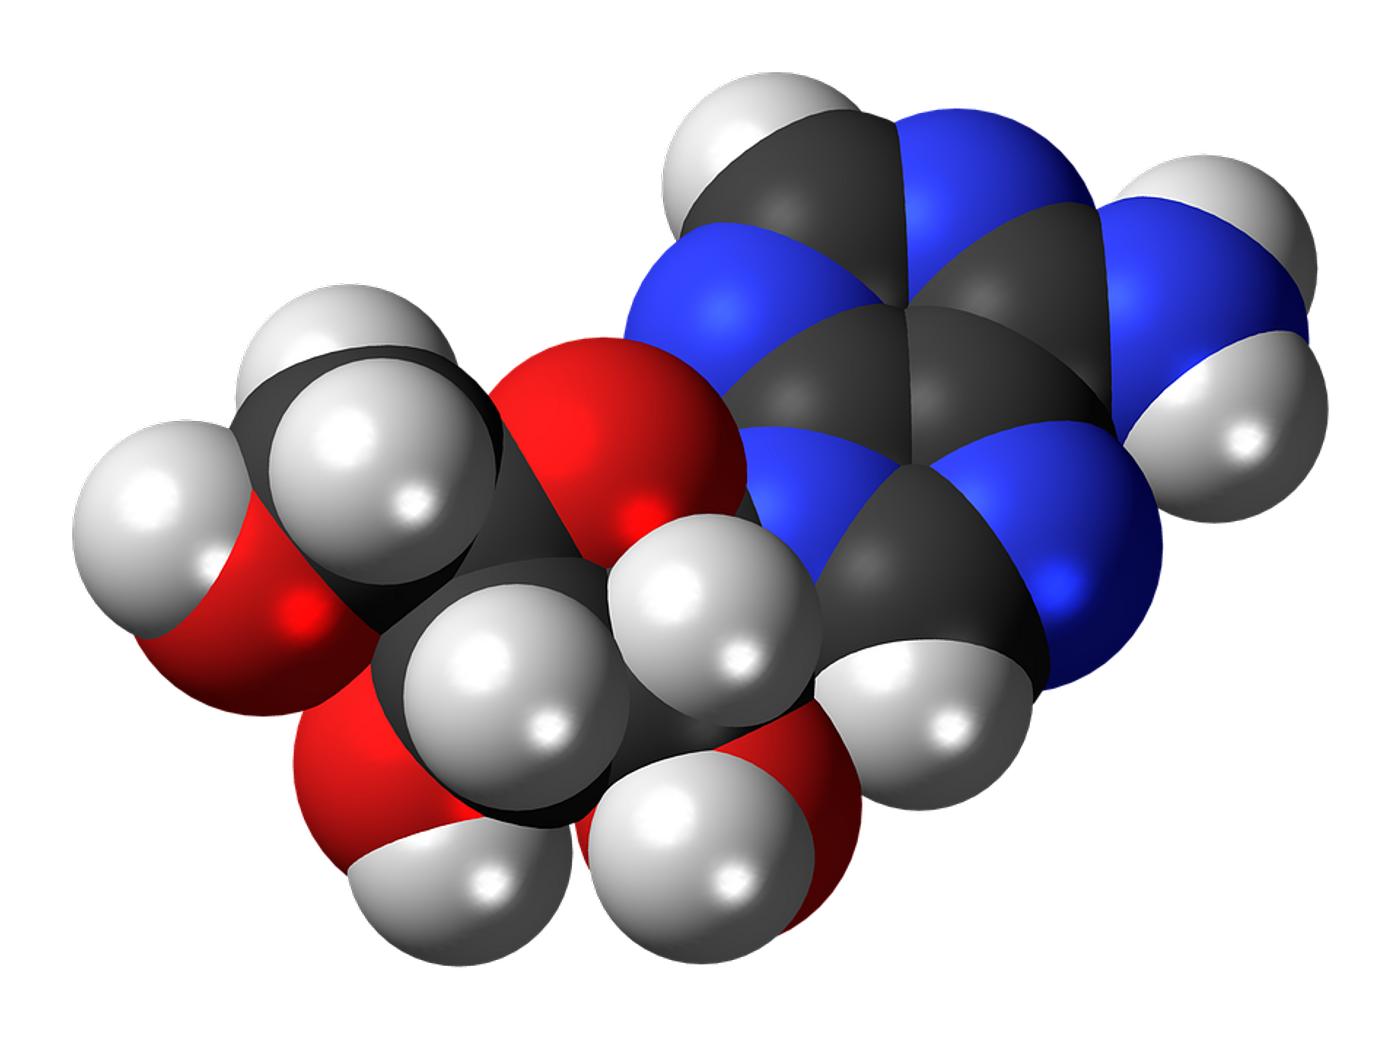 Adenosine molecule, from Pixabay